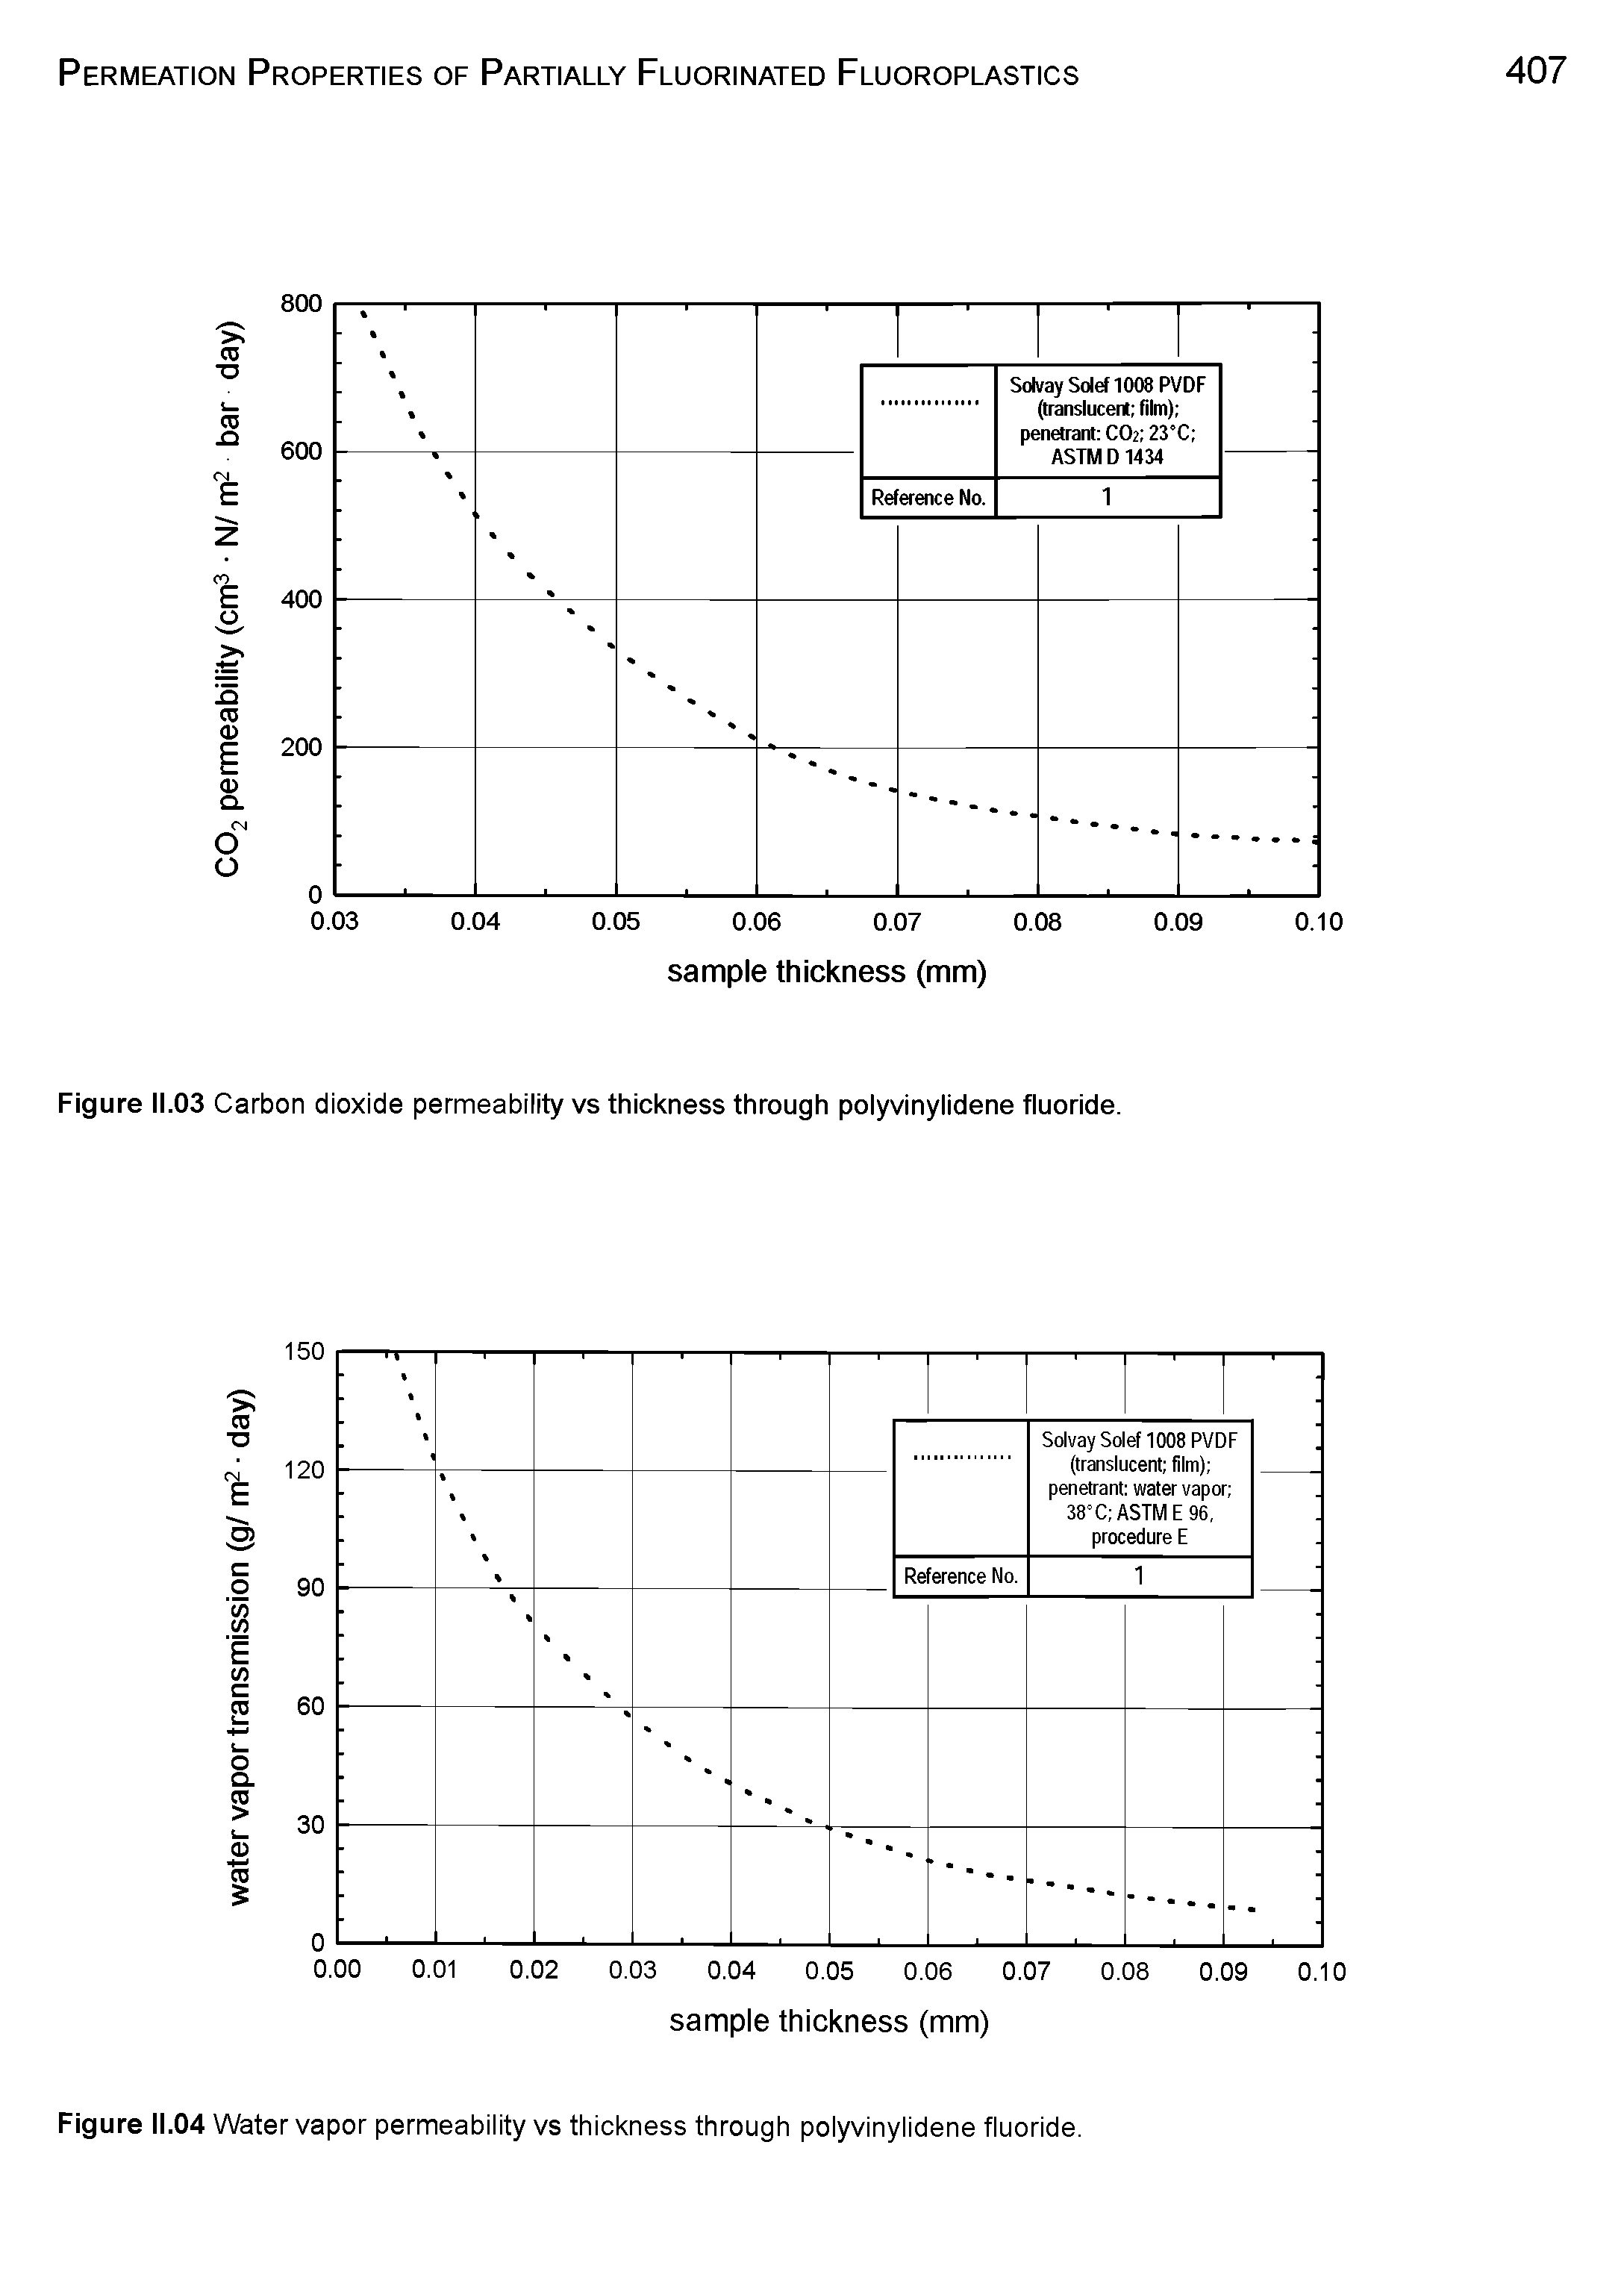 Figure II.03 Carbon dioxide permeability vs thickness through polyvinylidene fluoride.